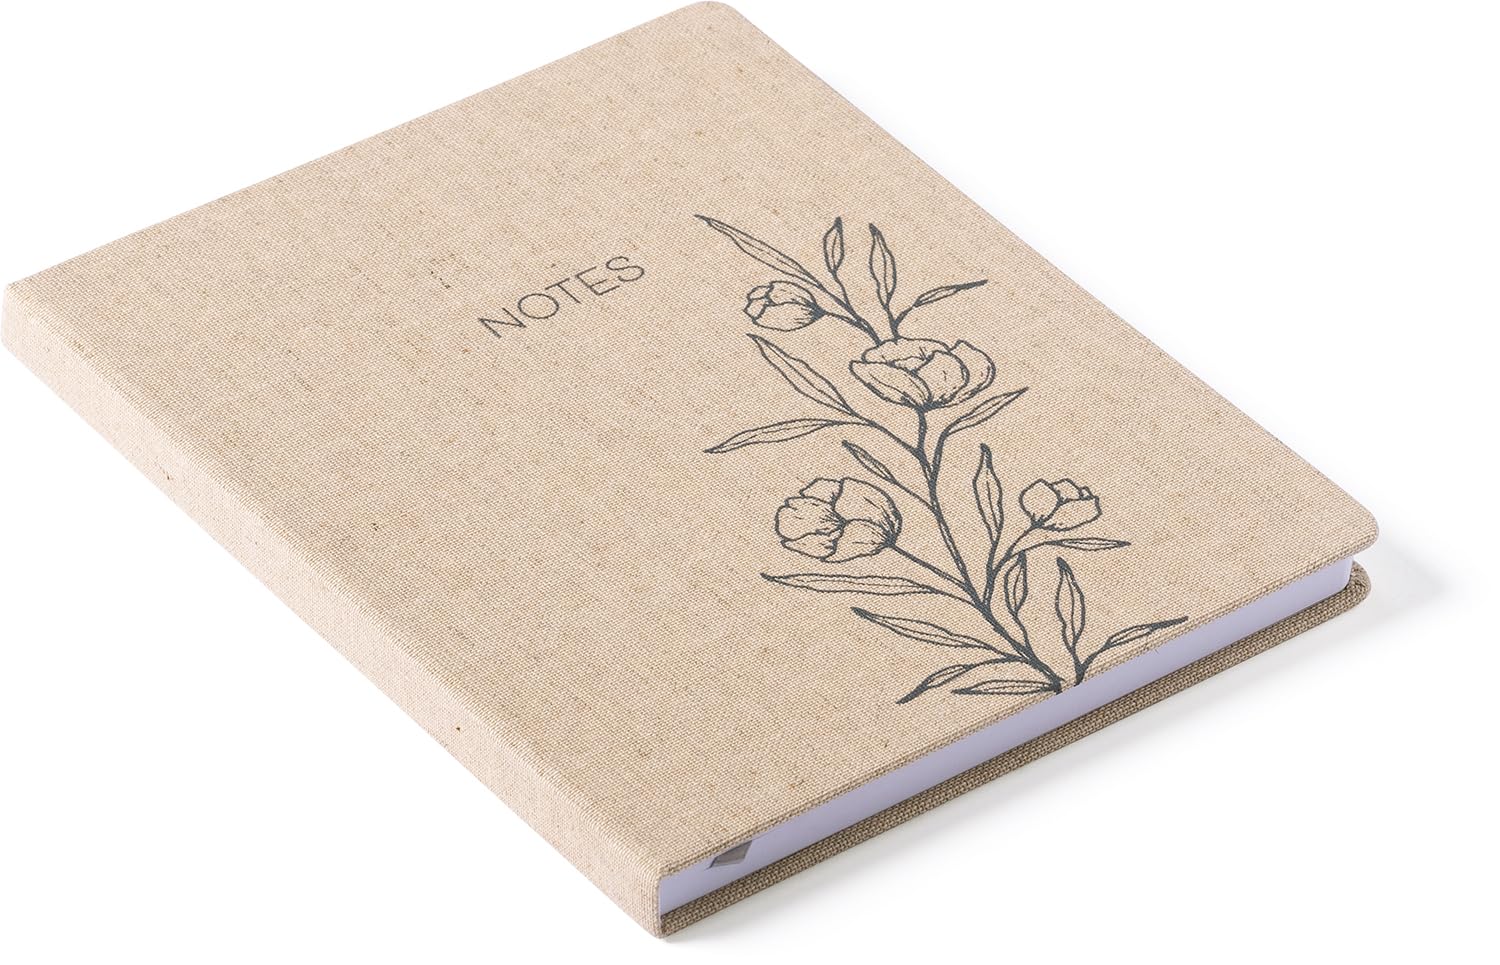 Hardbound Linen Cover Writing Journal